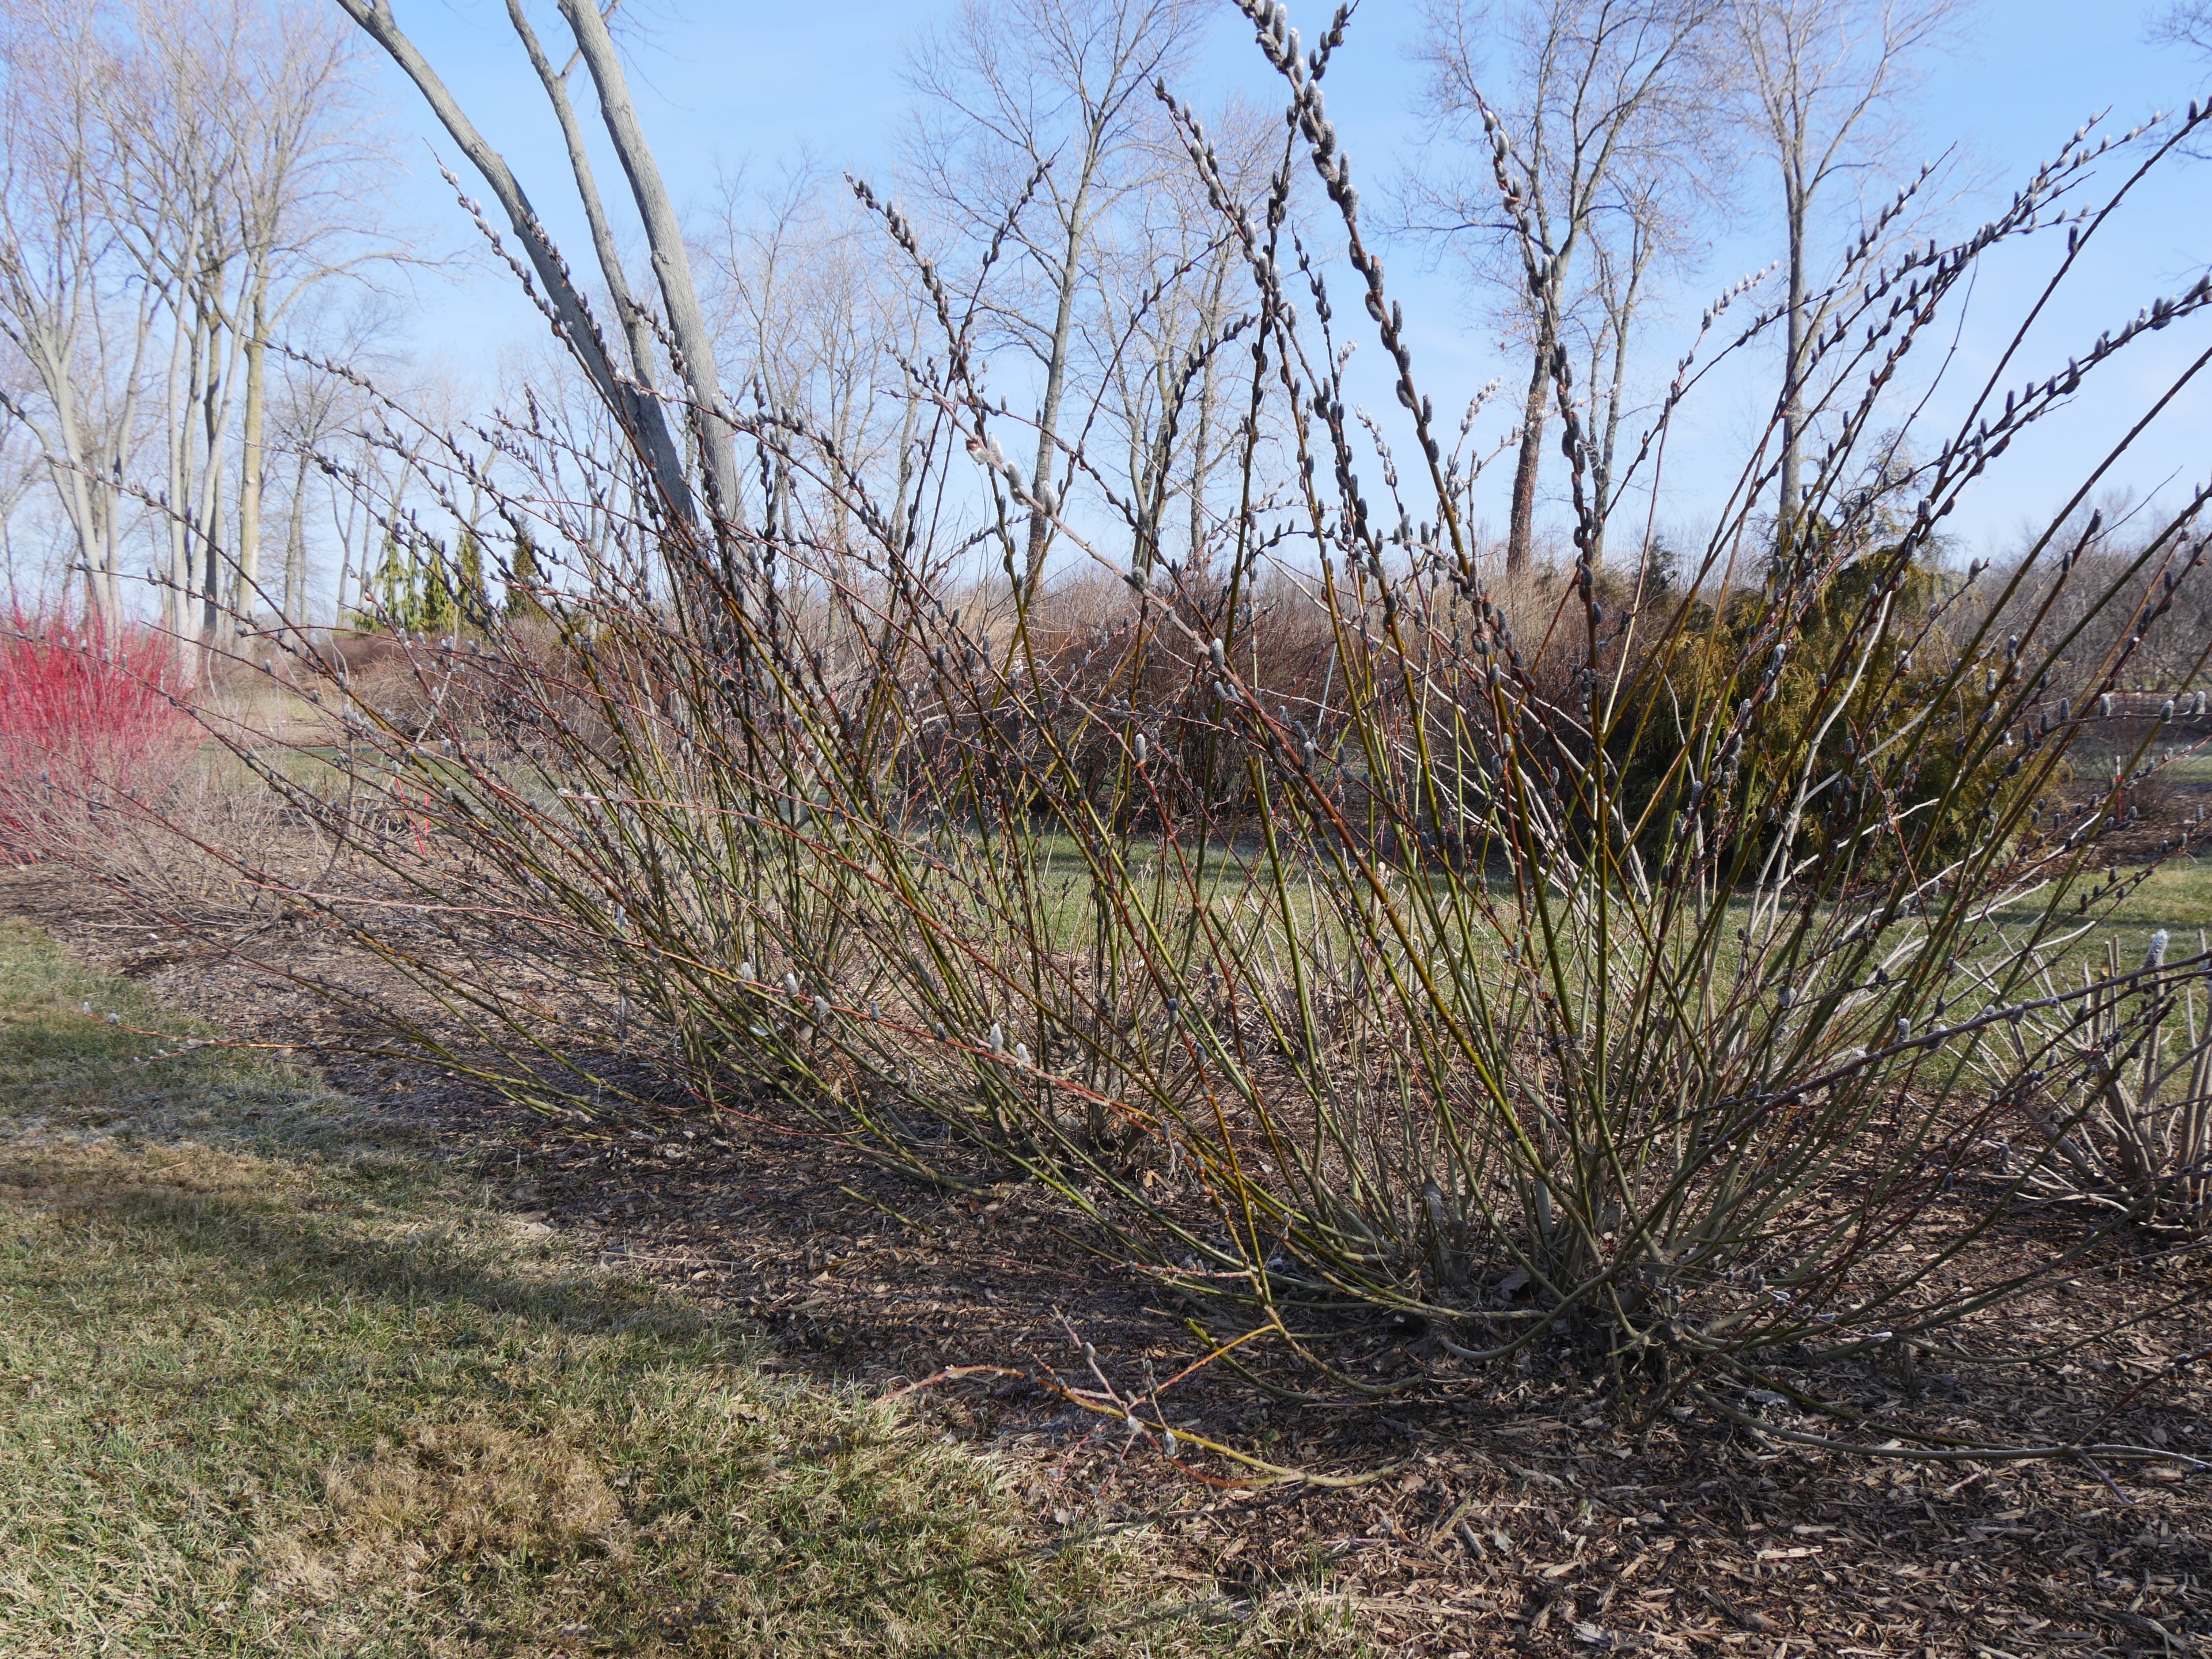 Salix Black Cat shrubs in early spring 